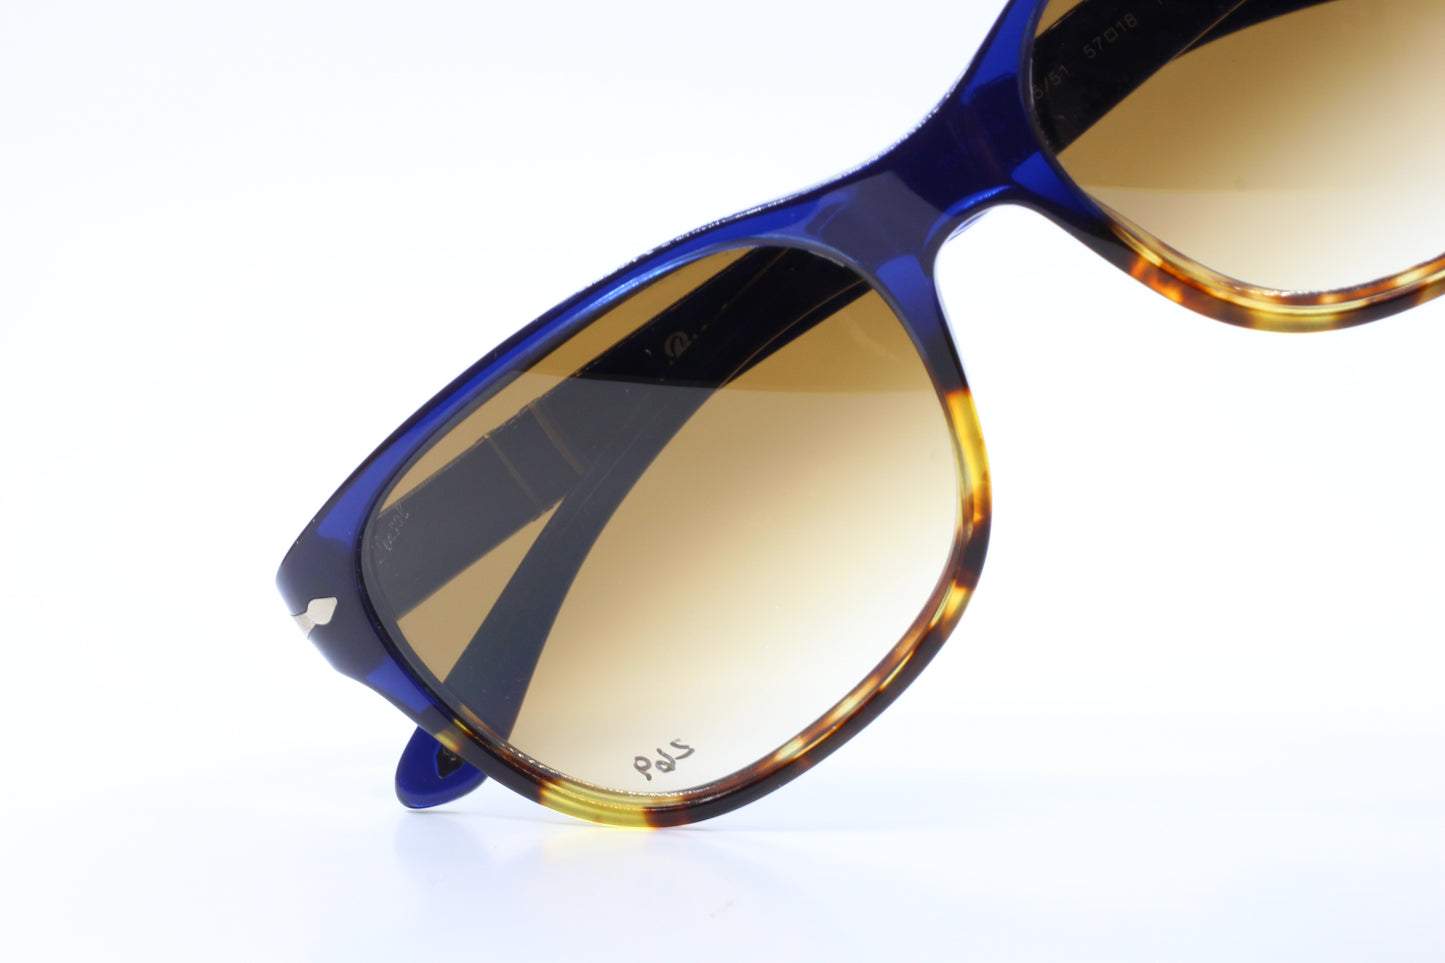 Persol PO3020-S 955/51 57mm Blue Brown Havana Tortoise Sunglasses - Men, sunglasses, Women